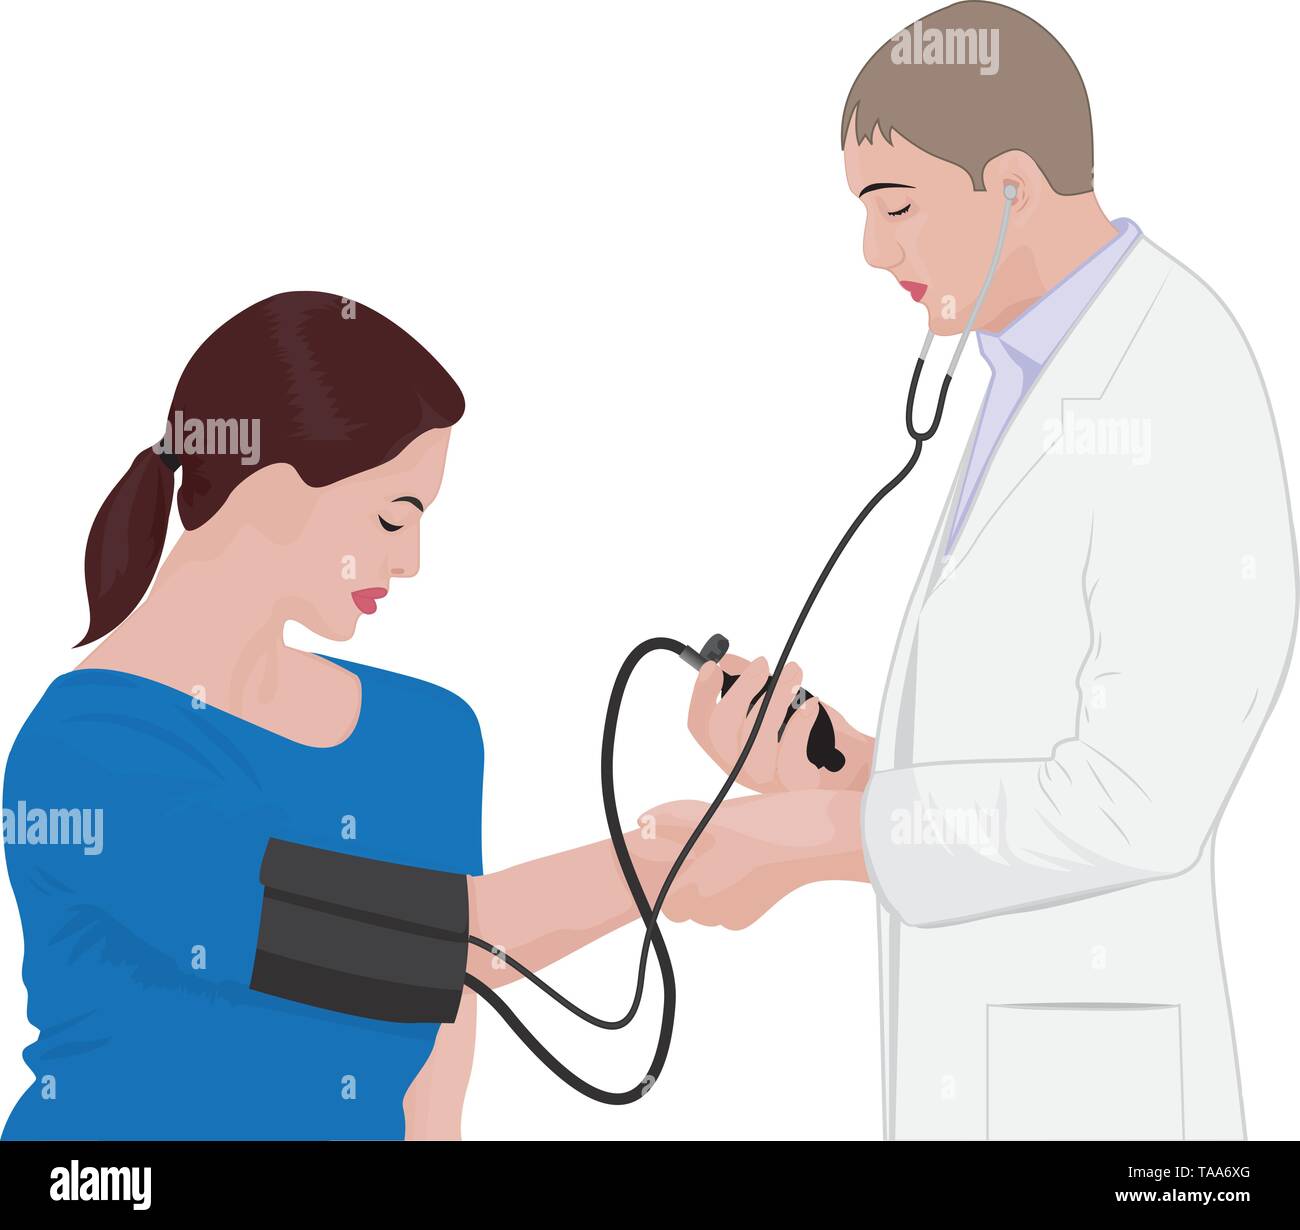 https://c8.alamy.com/compes/taa6xg/medicion-de-la-presion-sanguinea-examen-cardio-visitar-a-un-doctor-ilustracion-vectorial-sobre-un-fondo-blanco-taa6xg.jpg